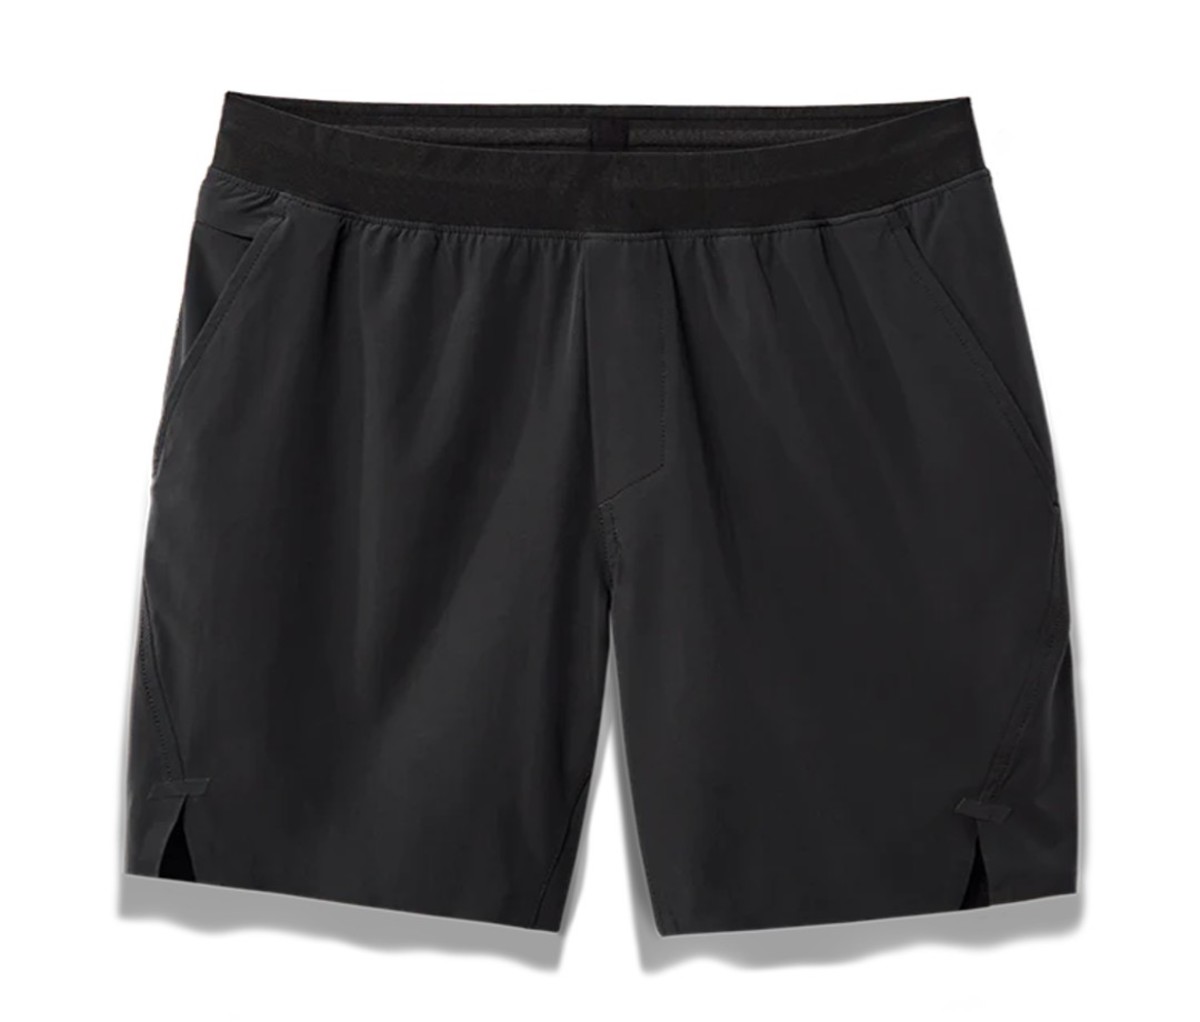 Ripper All-Arounder Shorts - Navy